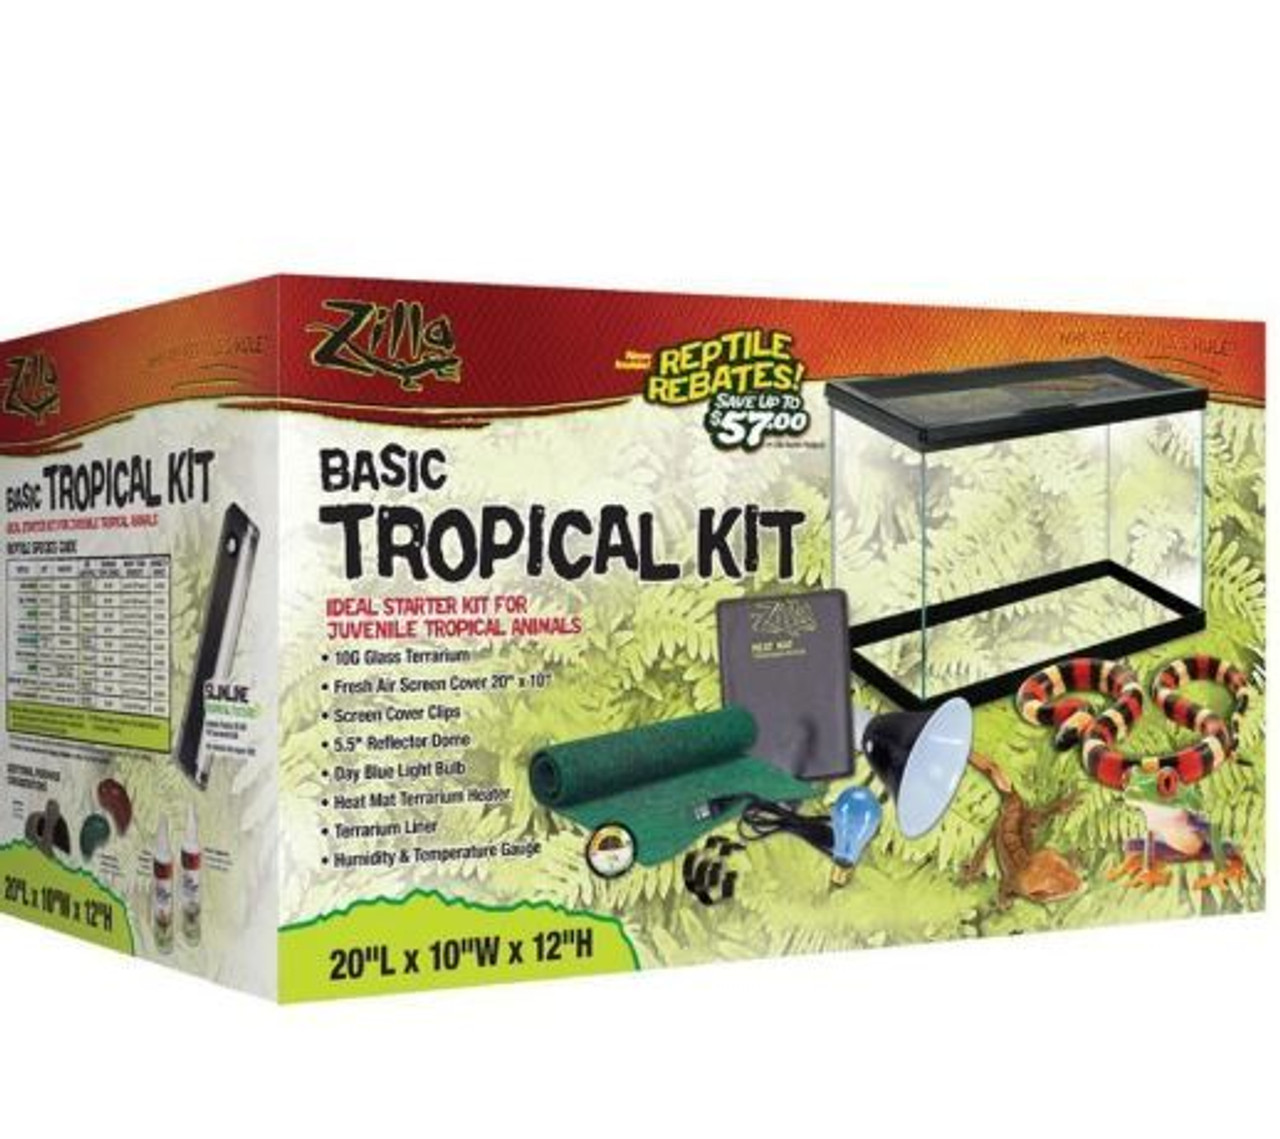 zilla basic tropical kit